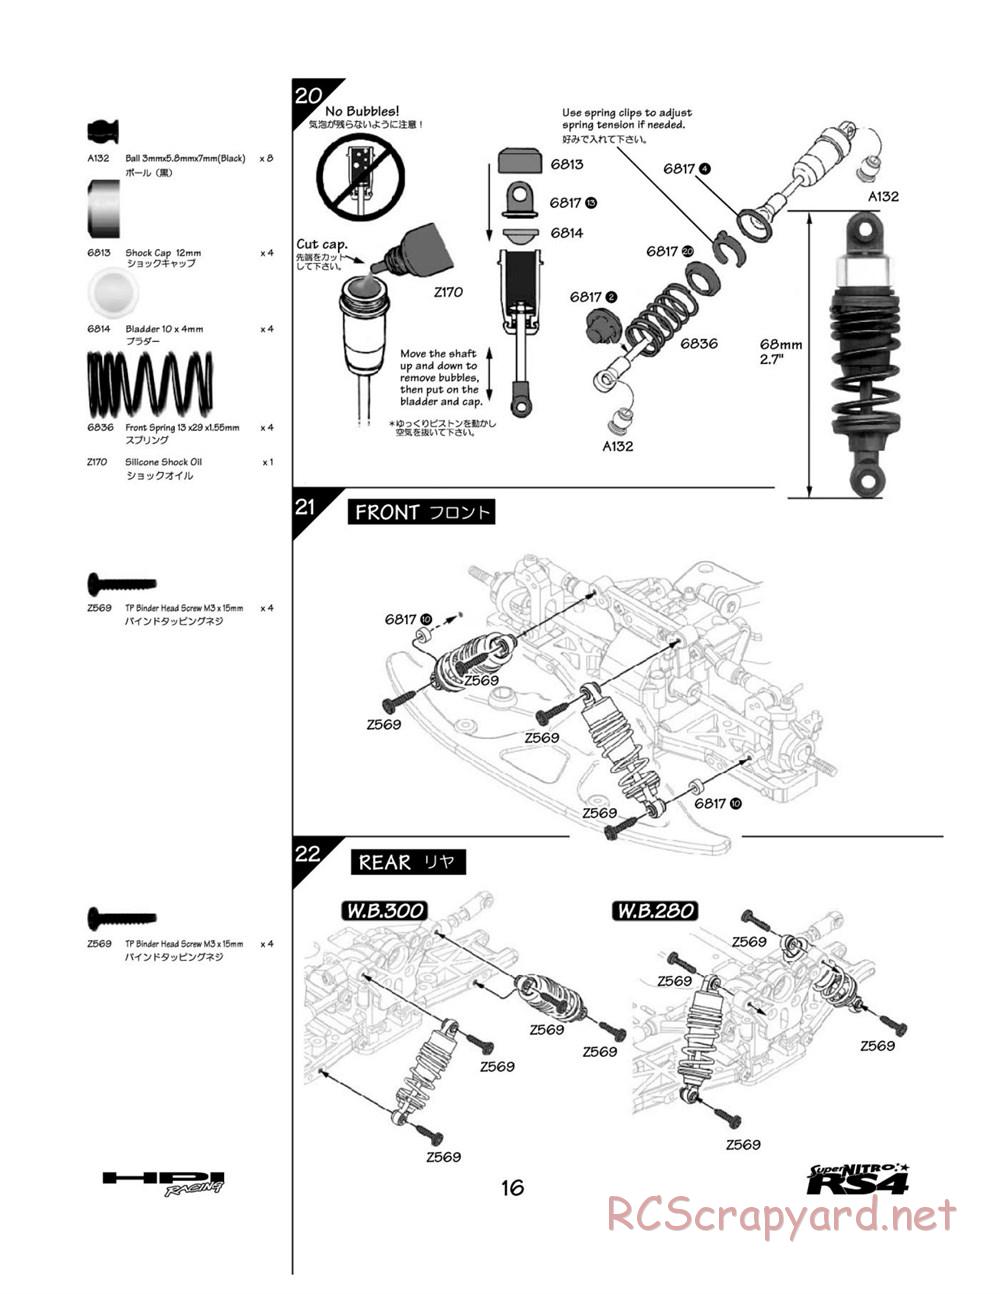 HPI - Super Nitro RS4 - Manual - Page 16